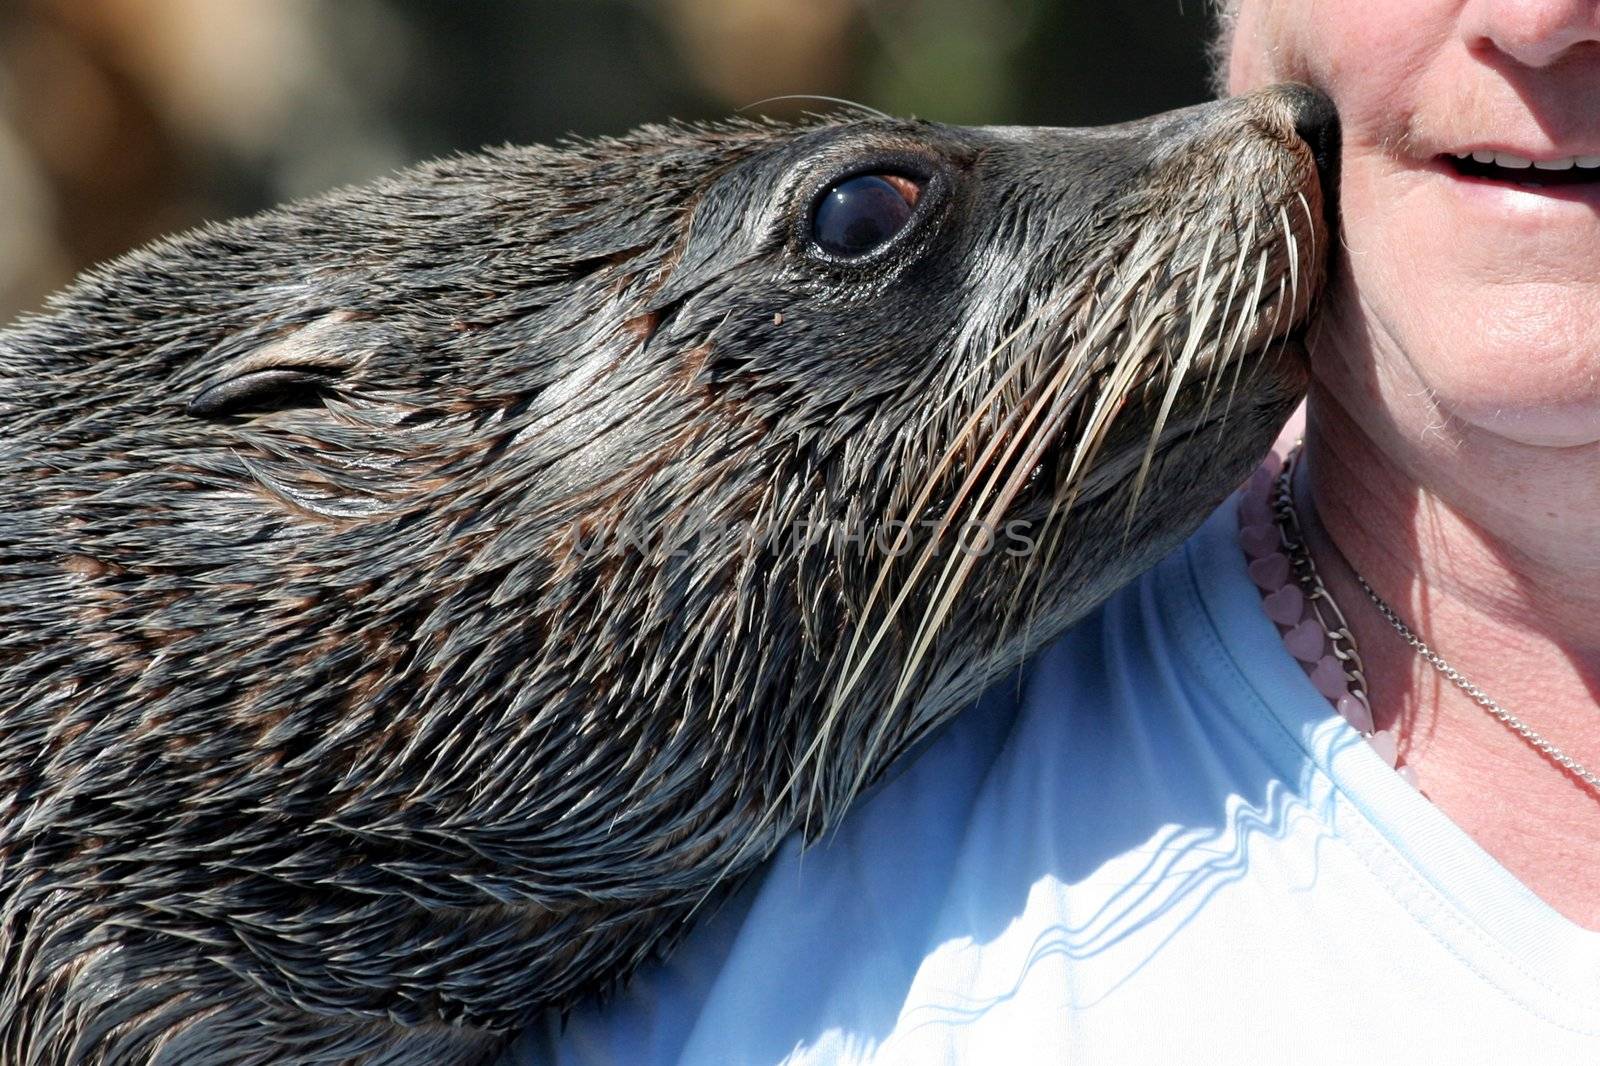 Cape Fur Seal kissing the cheek of a woman